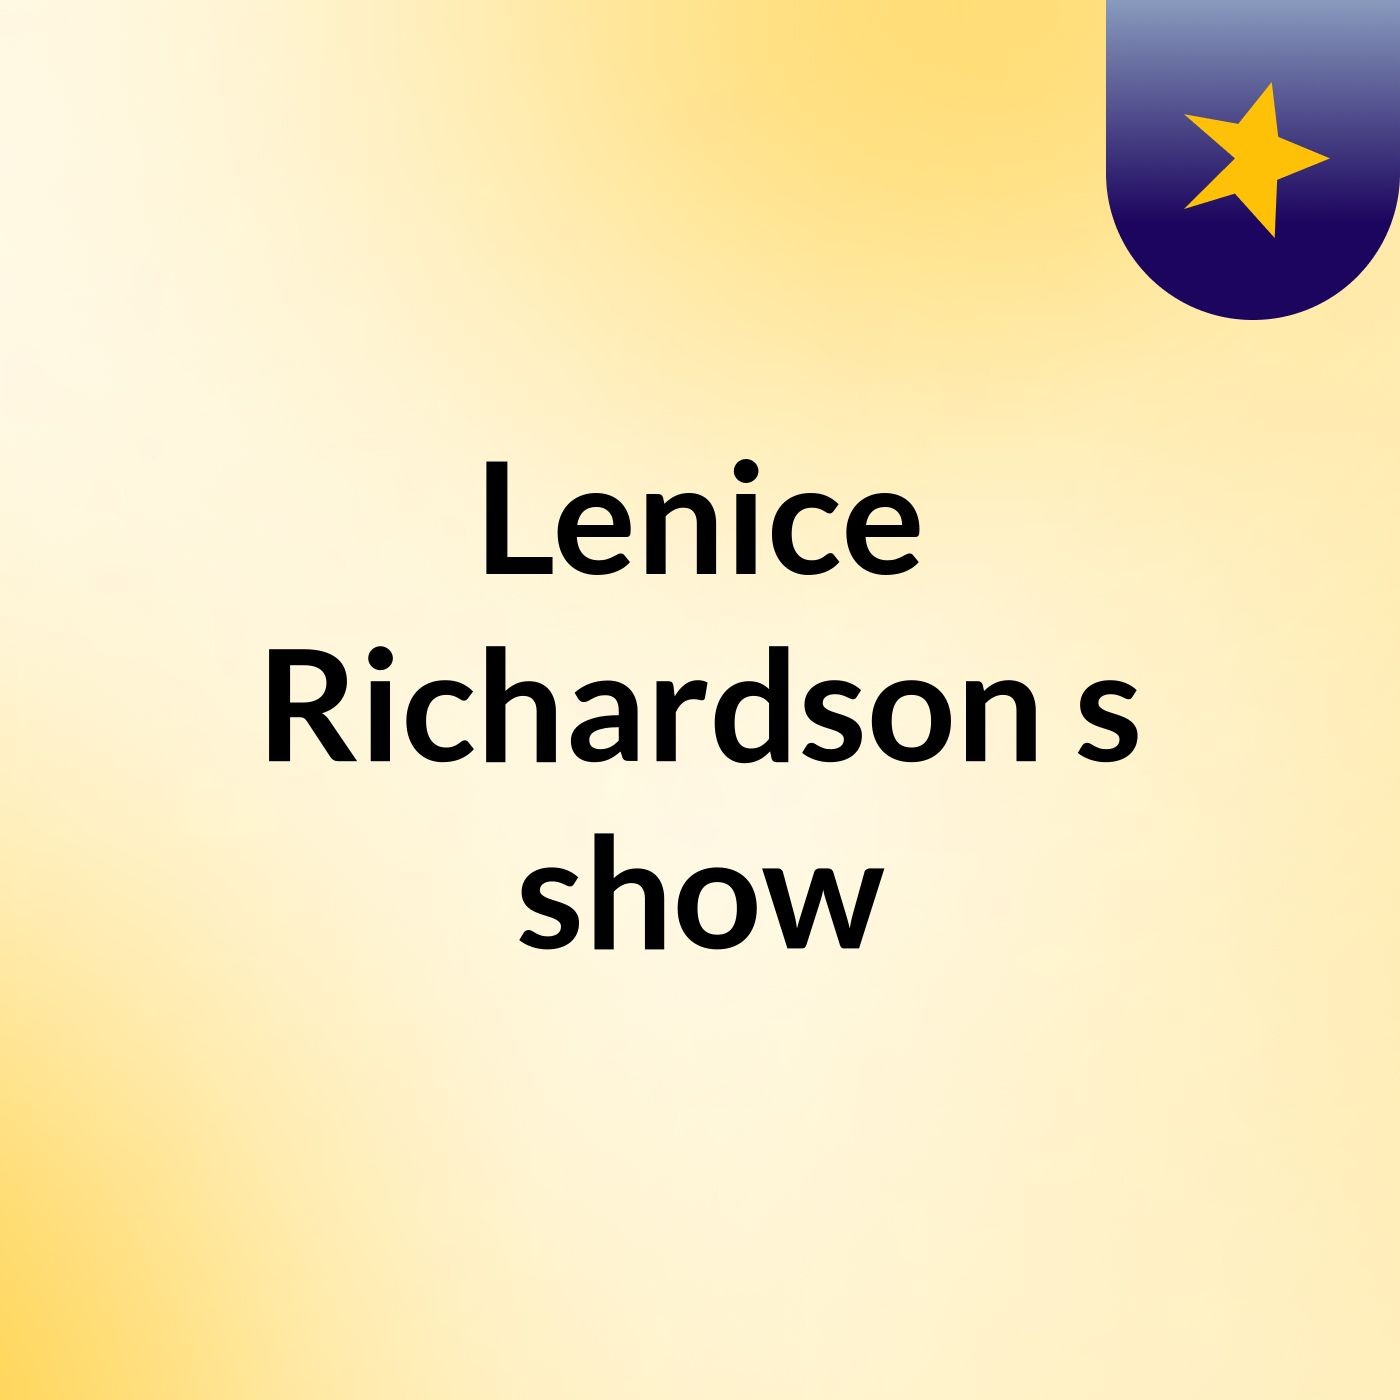 Lenice Richardson's show